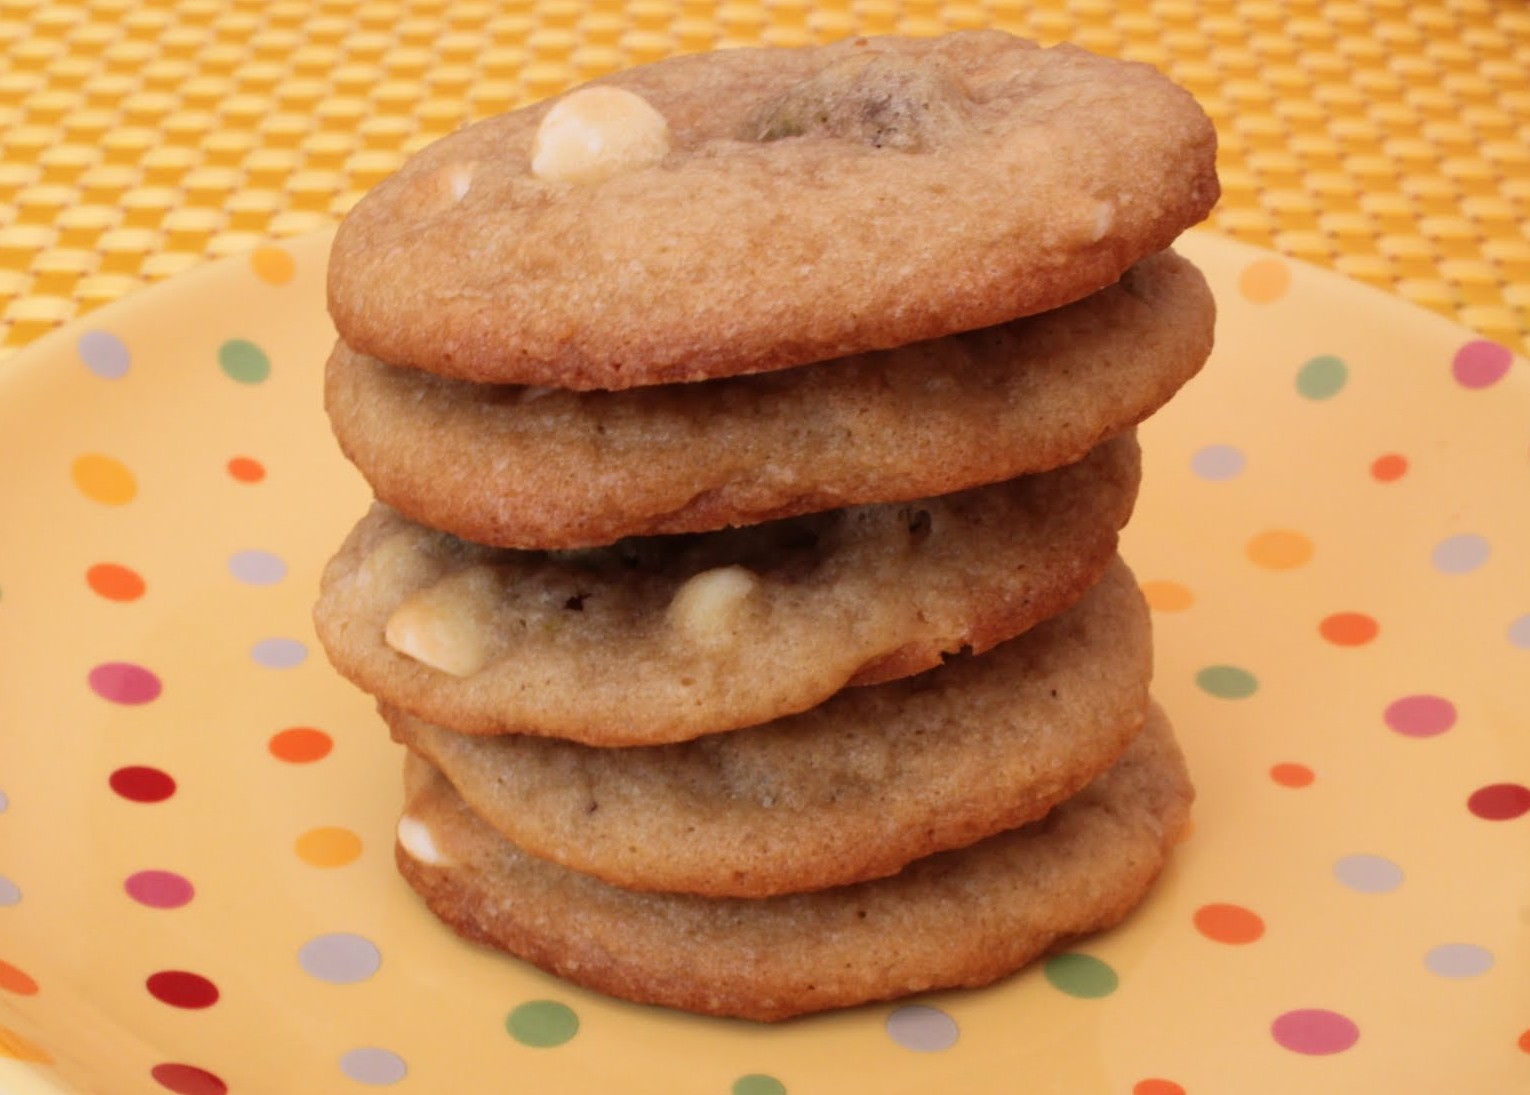 White Chocolate Pistachio Cookies